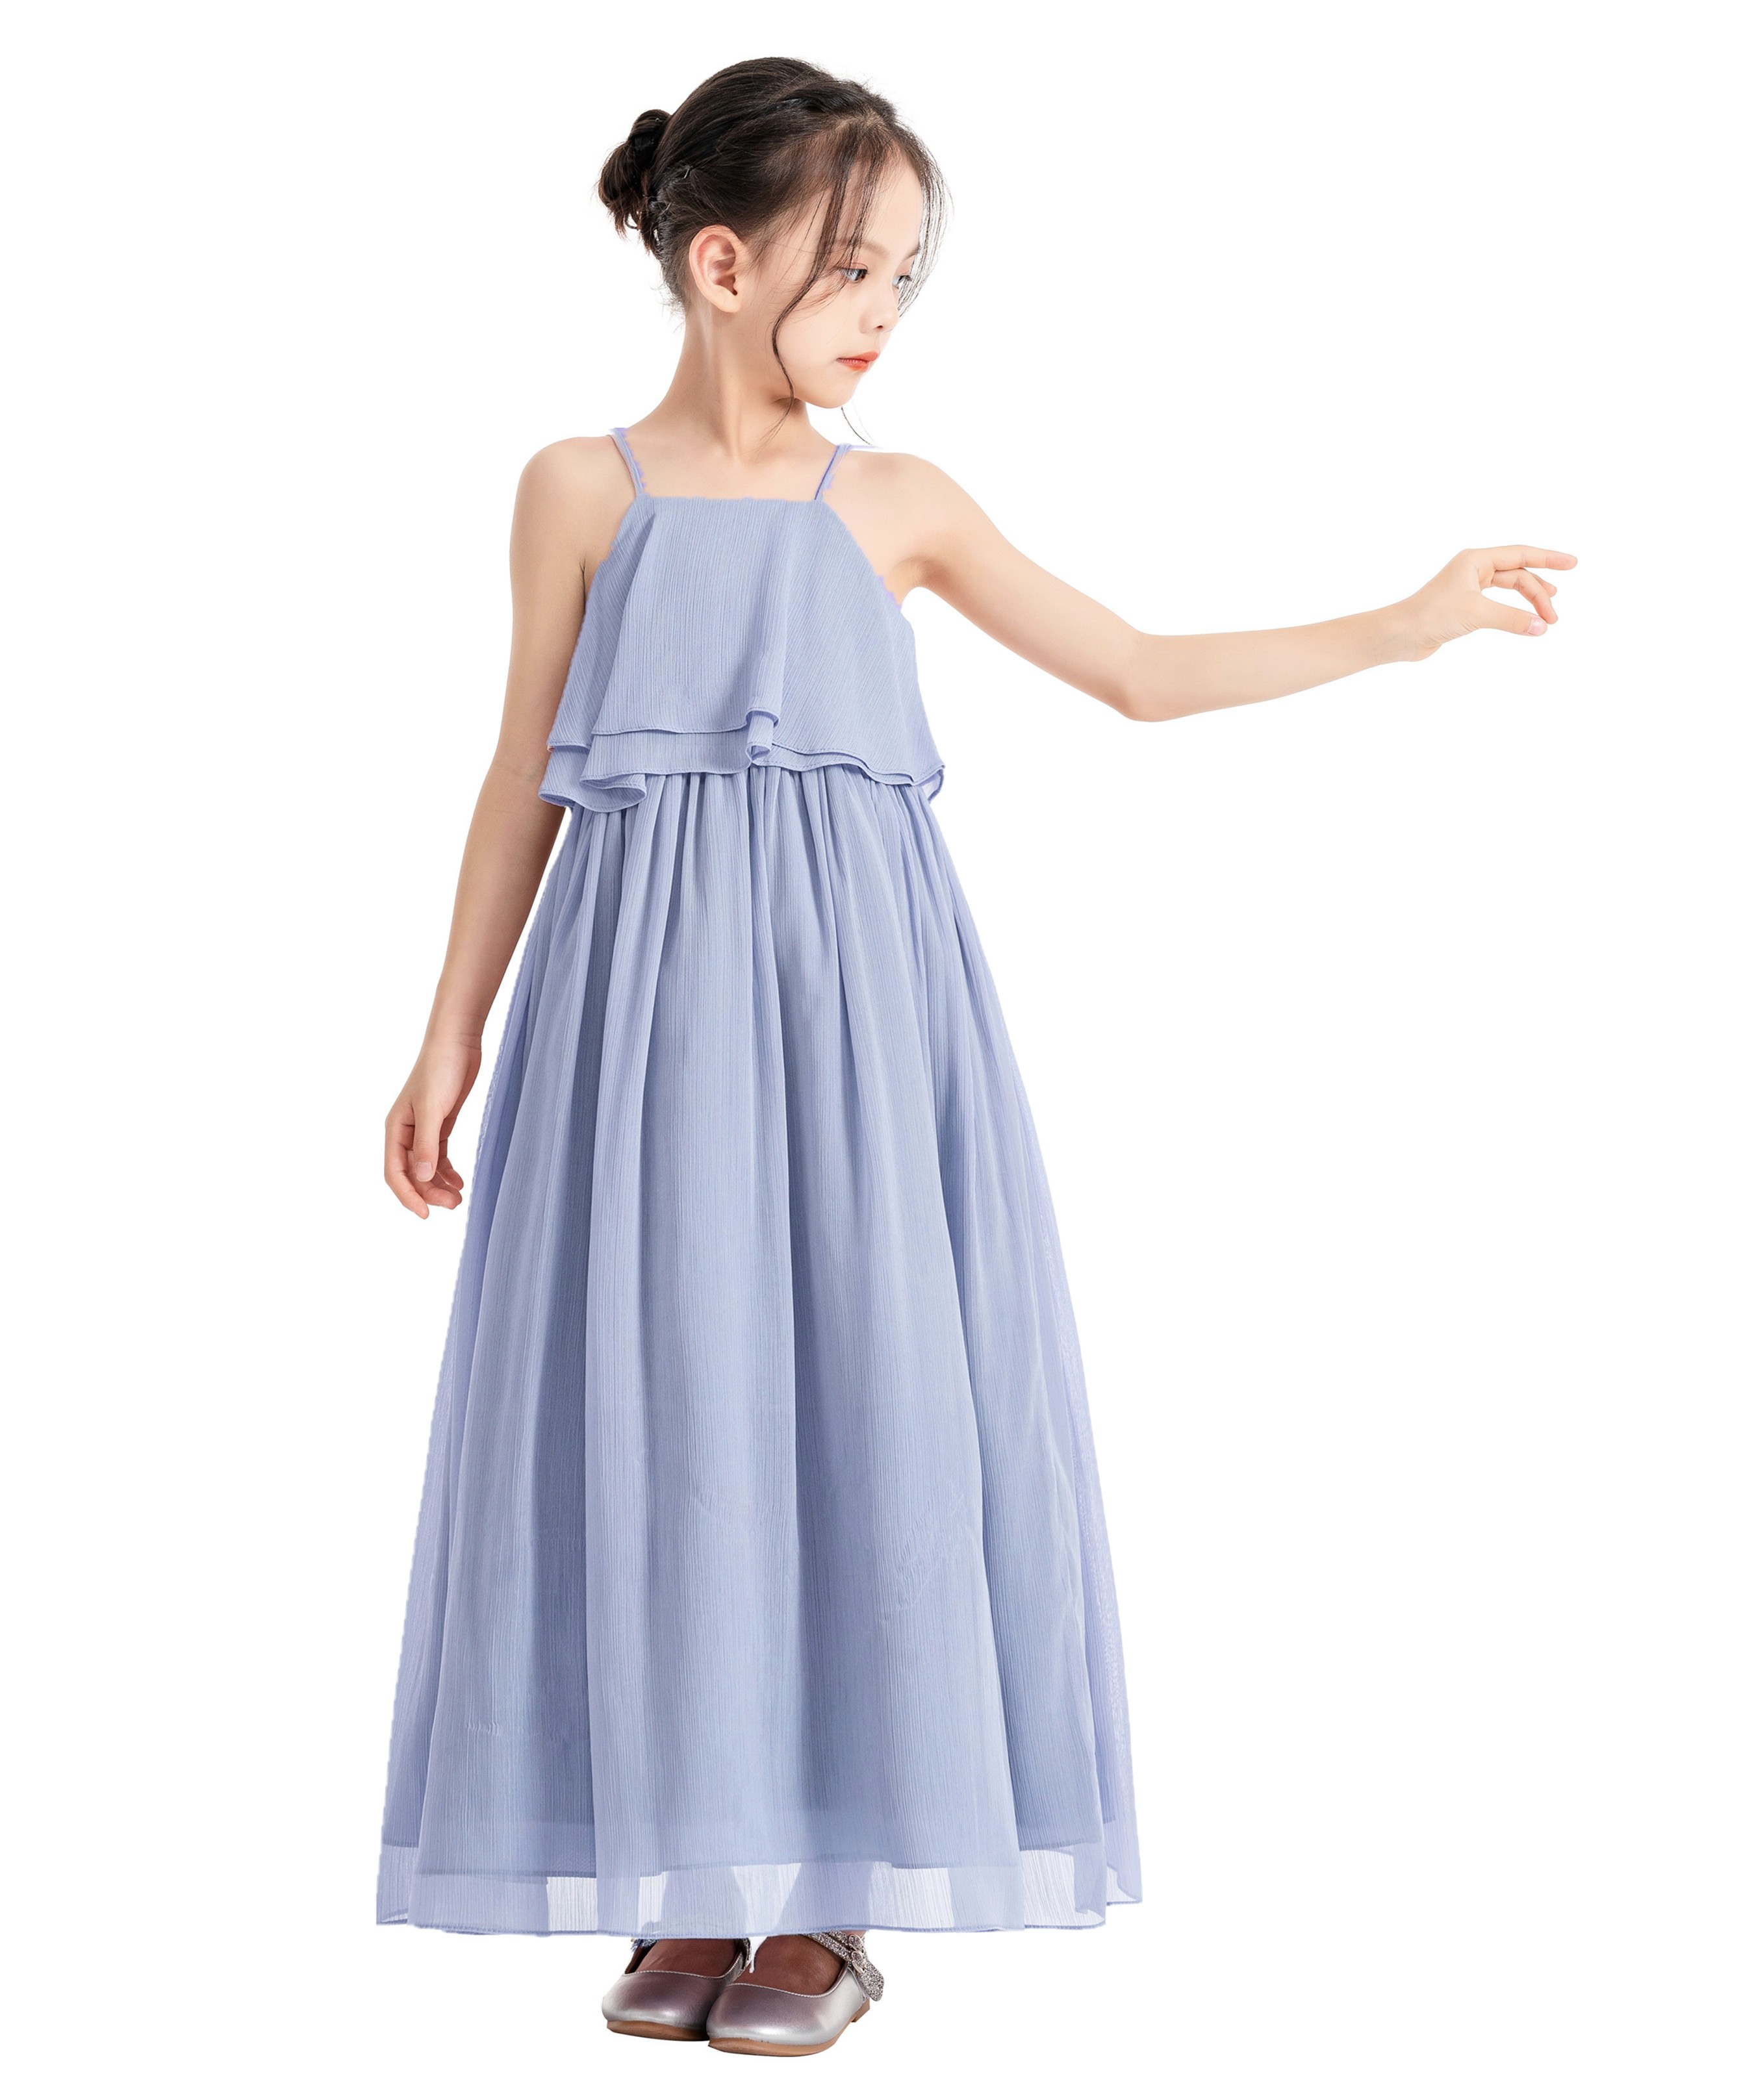 Dusty Lavender A-Line Ruffle Chiffon Dress Chiffon Flower Girl Dress 192